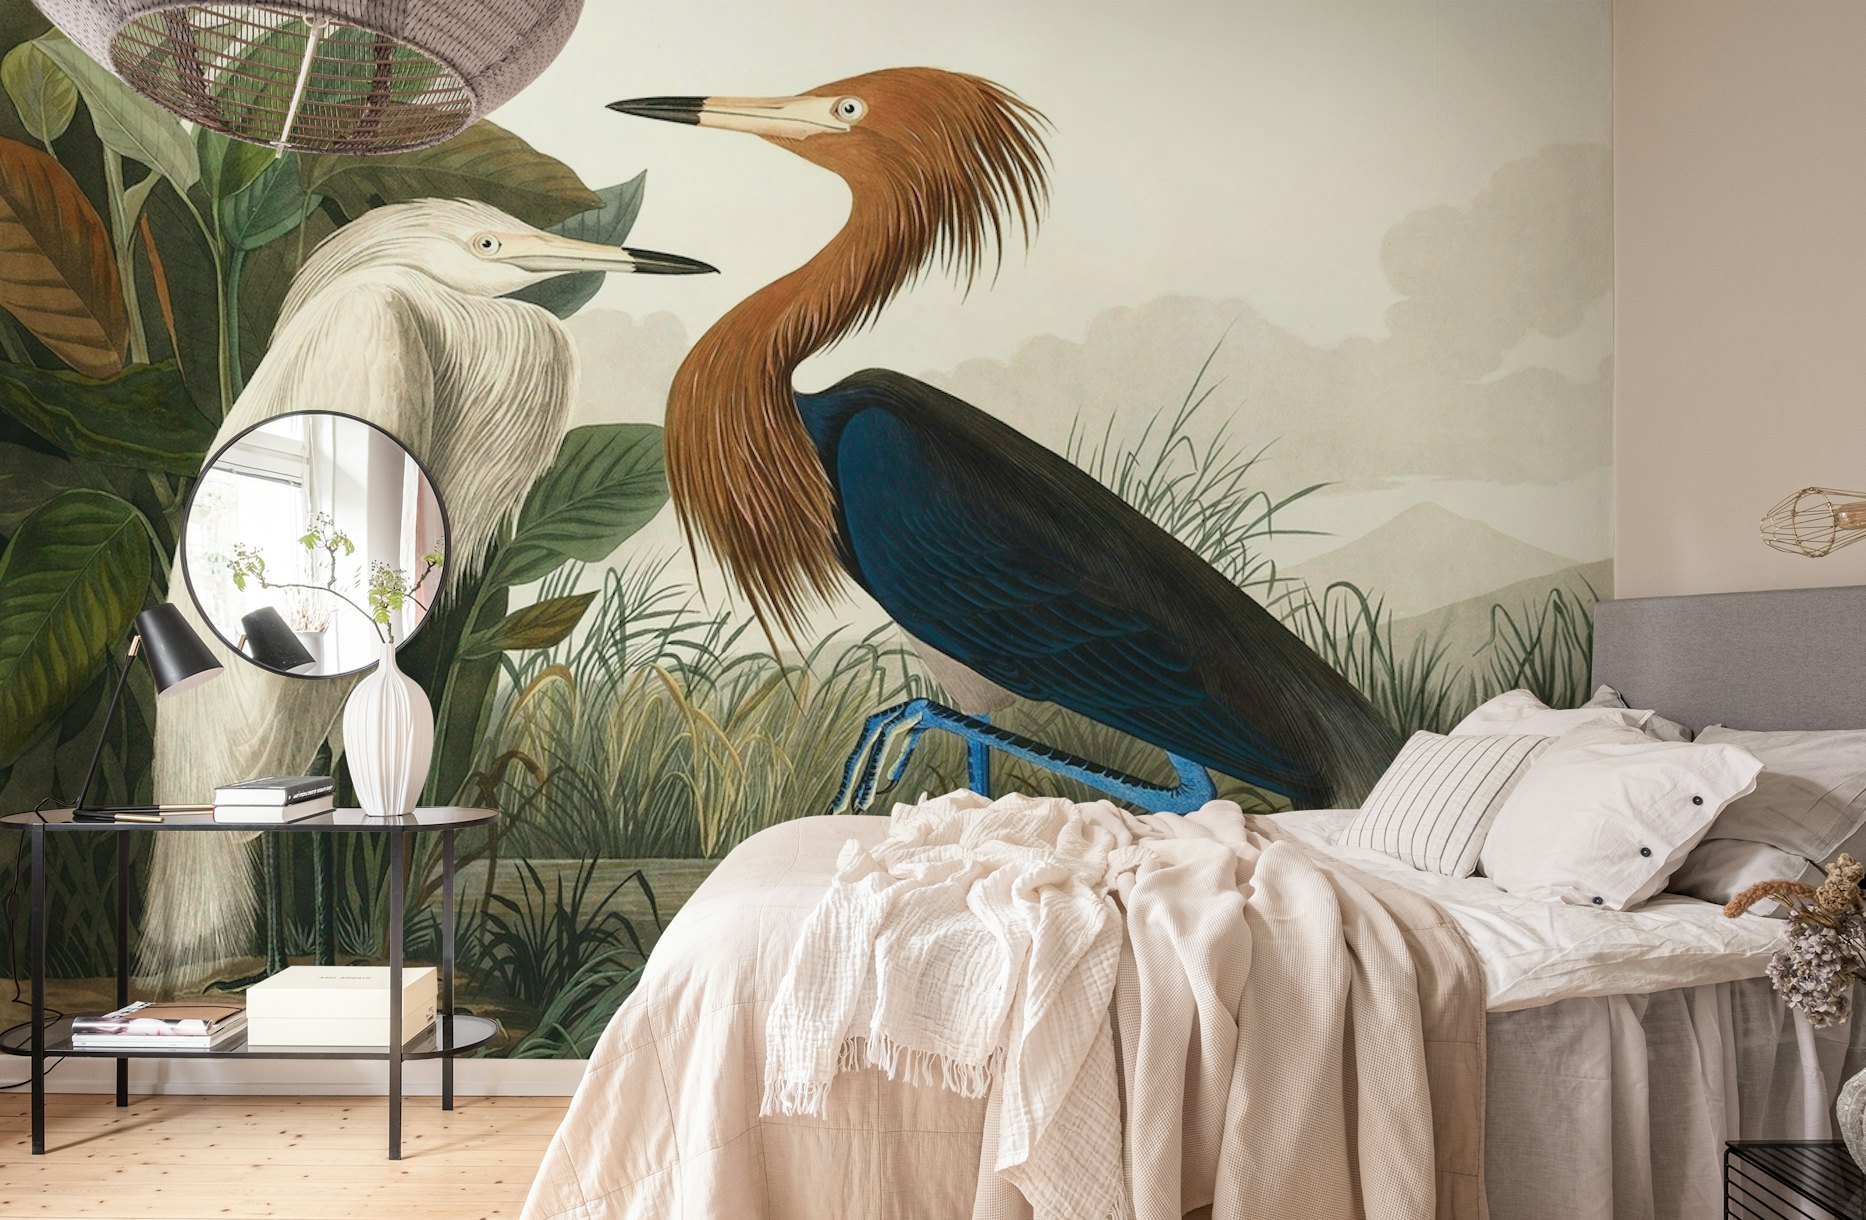 Vintage Tropical Birds papel pintado